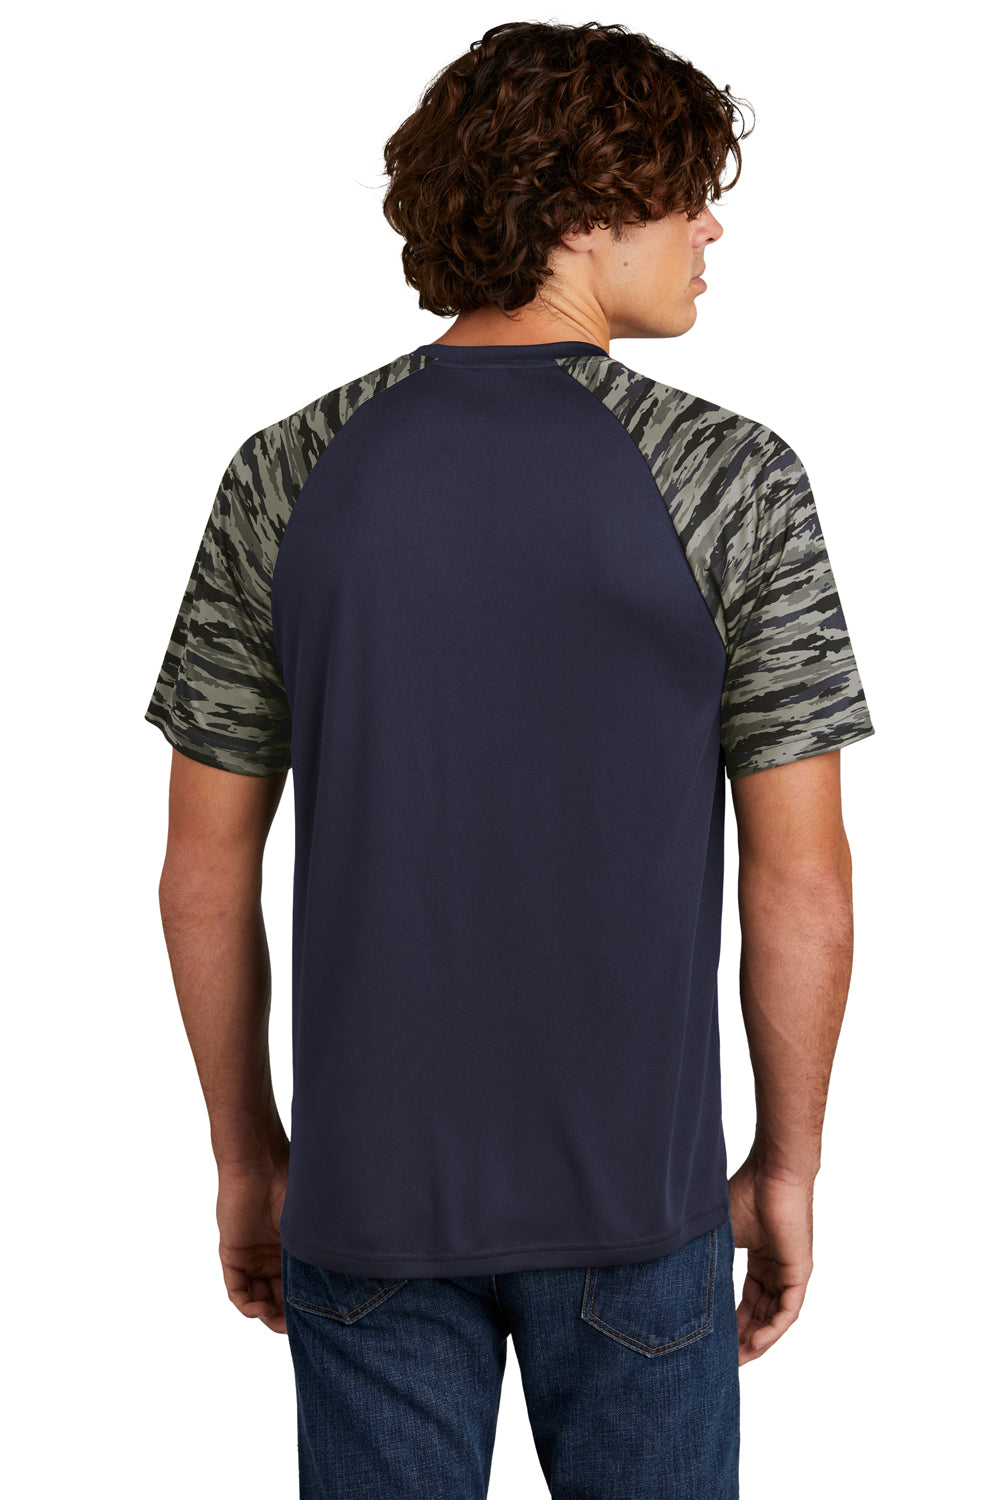 Sport-Tek Mens Drift Camo Colorblock Short Sleeve Crewneck T-Shirt True Navy Blue Back